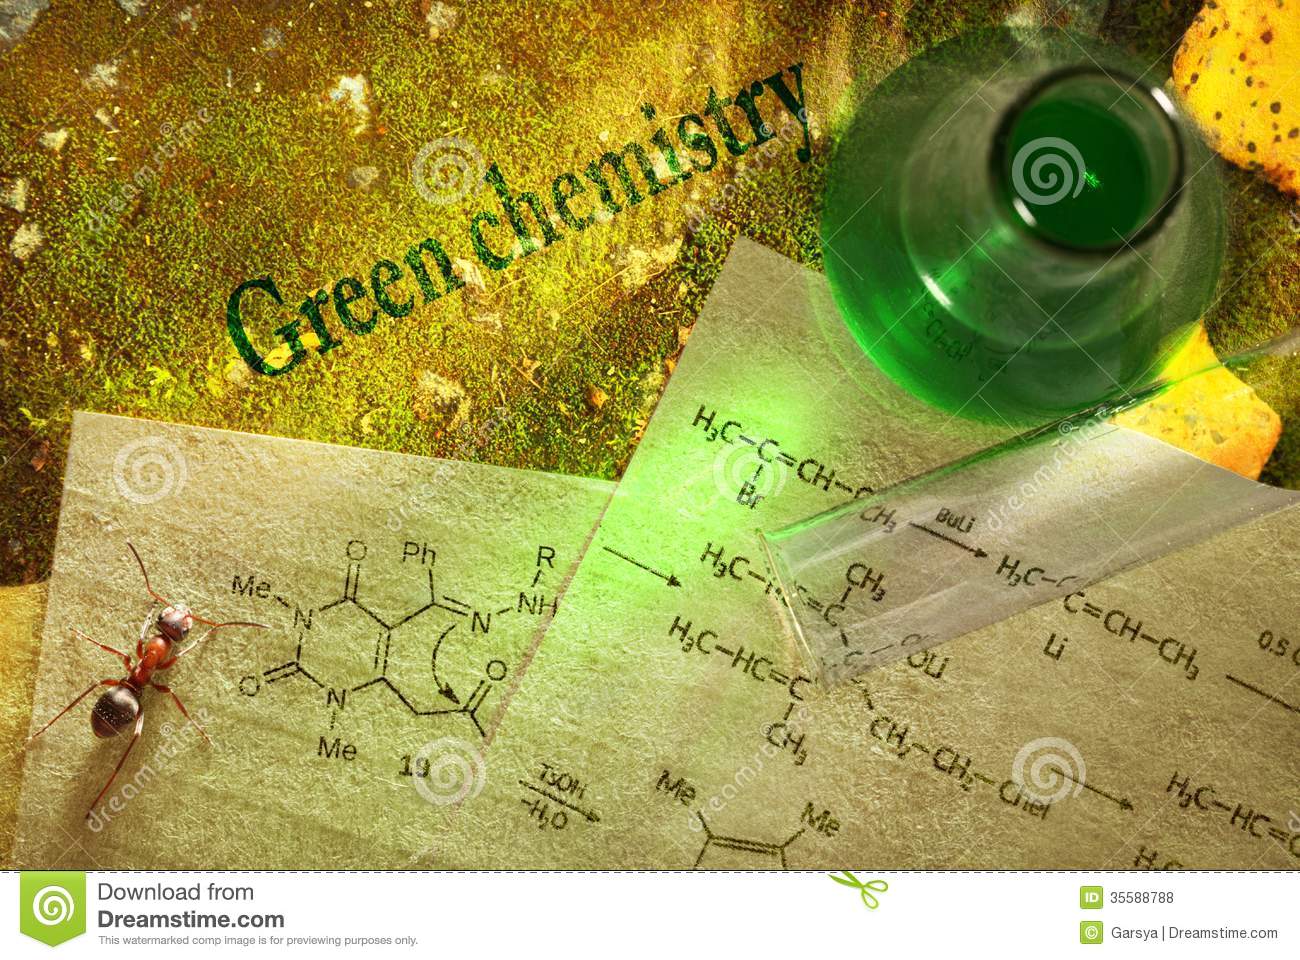 groene chemie